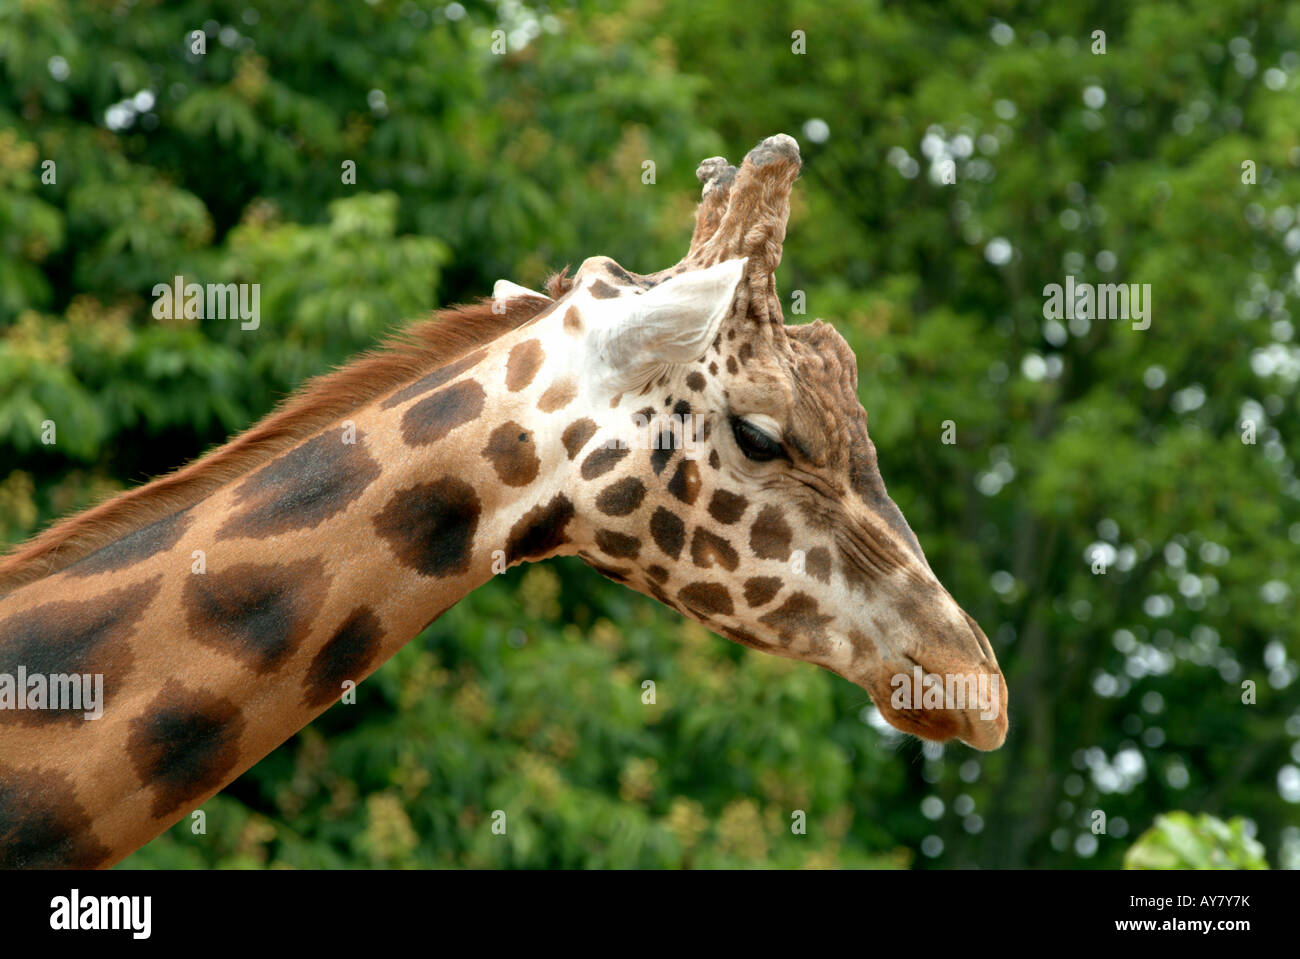 side view of head of giraffe Edinburgh zoo green leaves behind Stock Photo